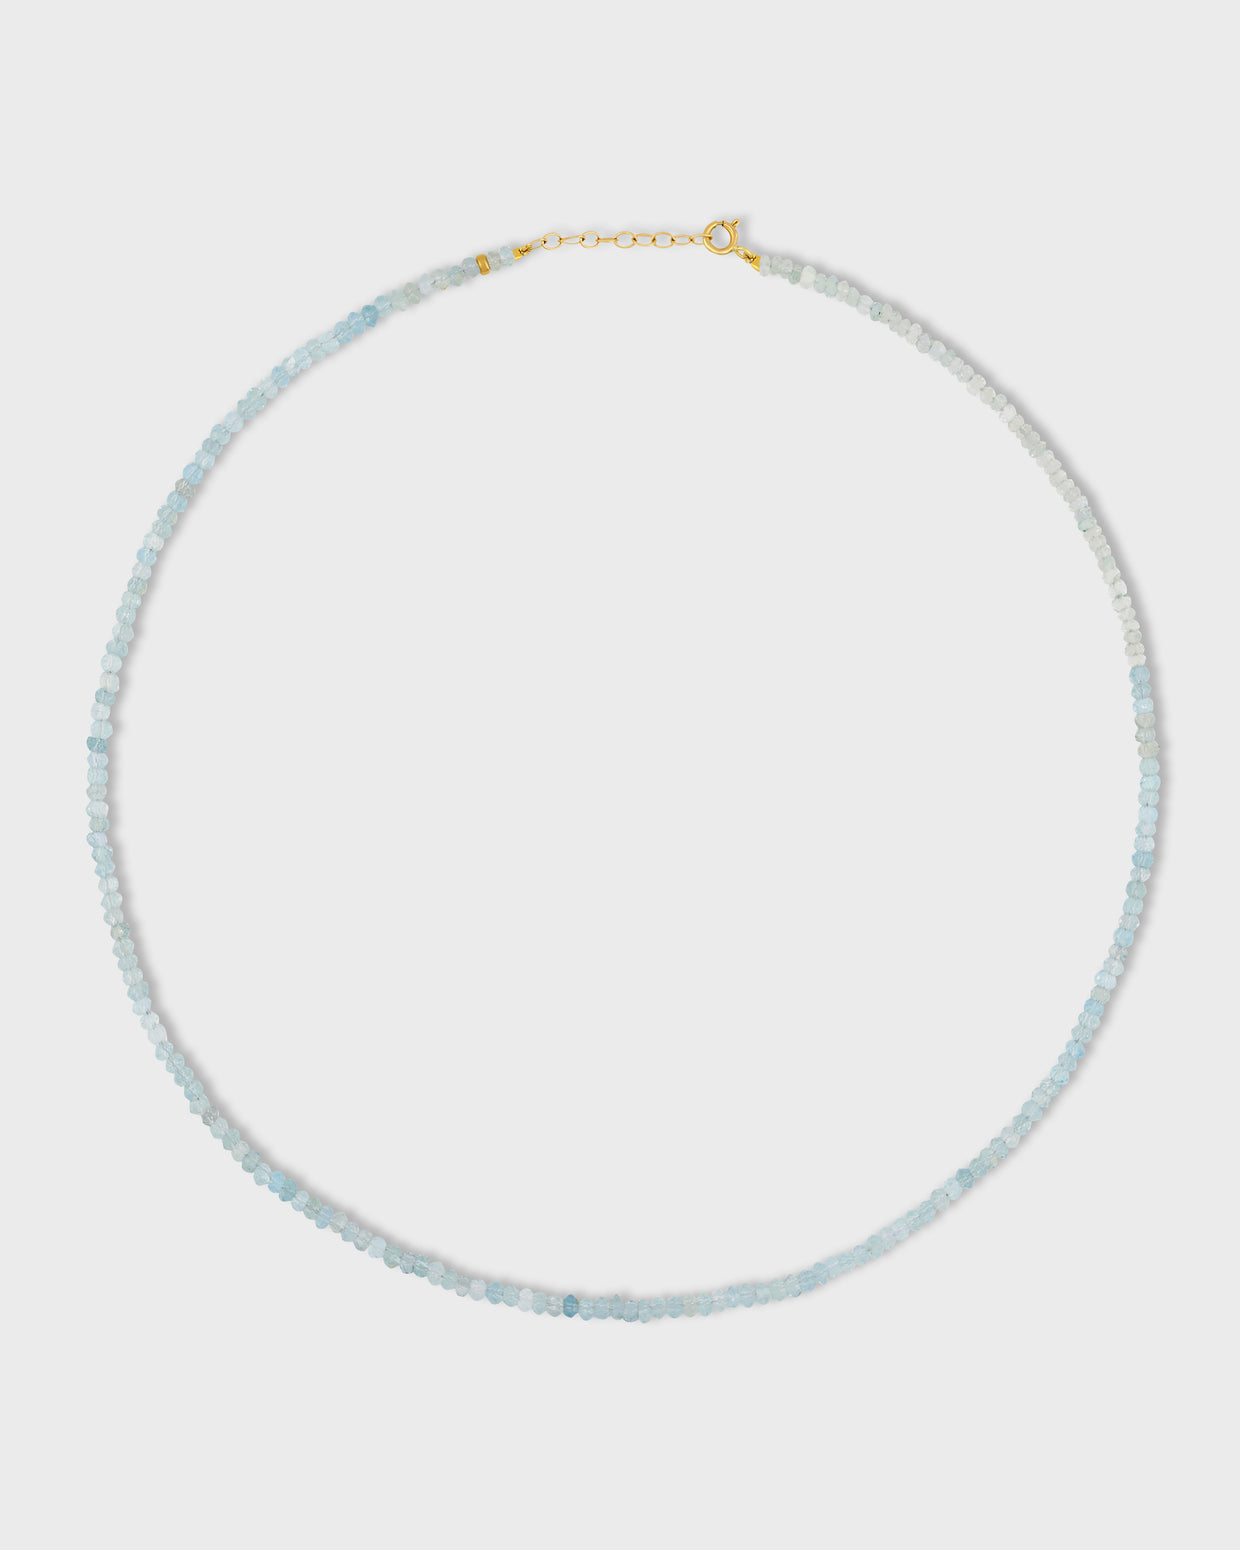 Birthstone March Aquamarine Beaded Necklace